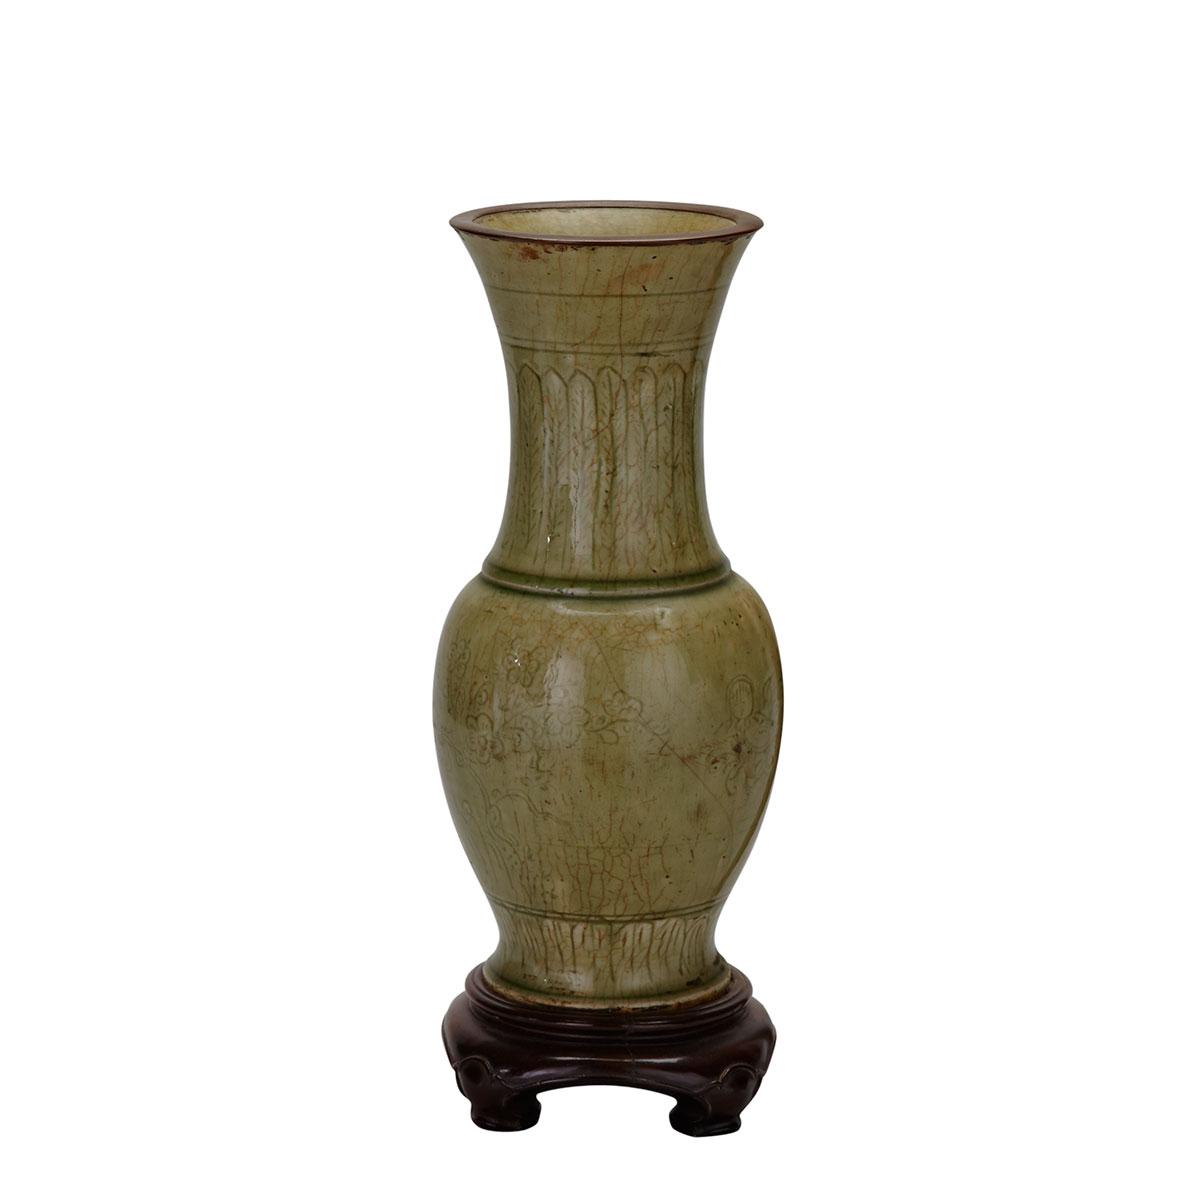 Longquan Baluster Vase, 15th/16th Century